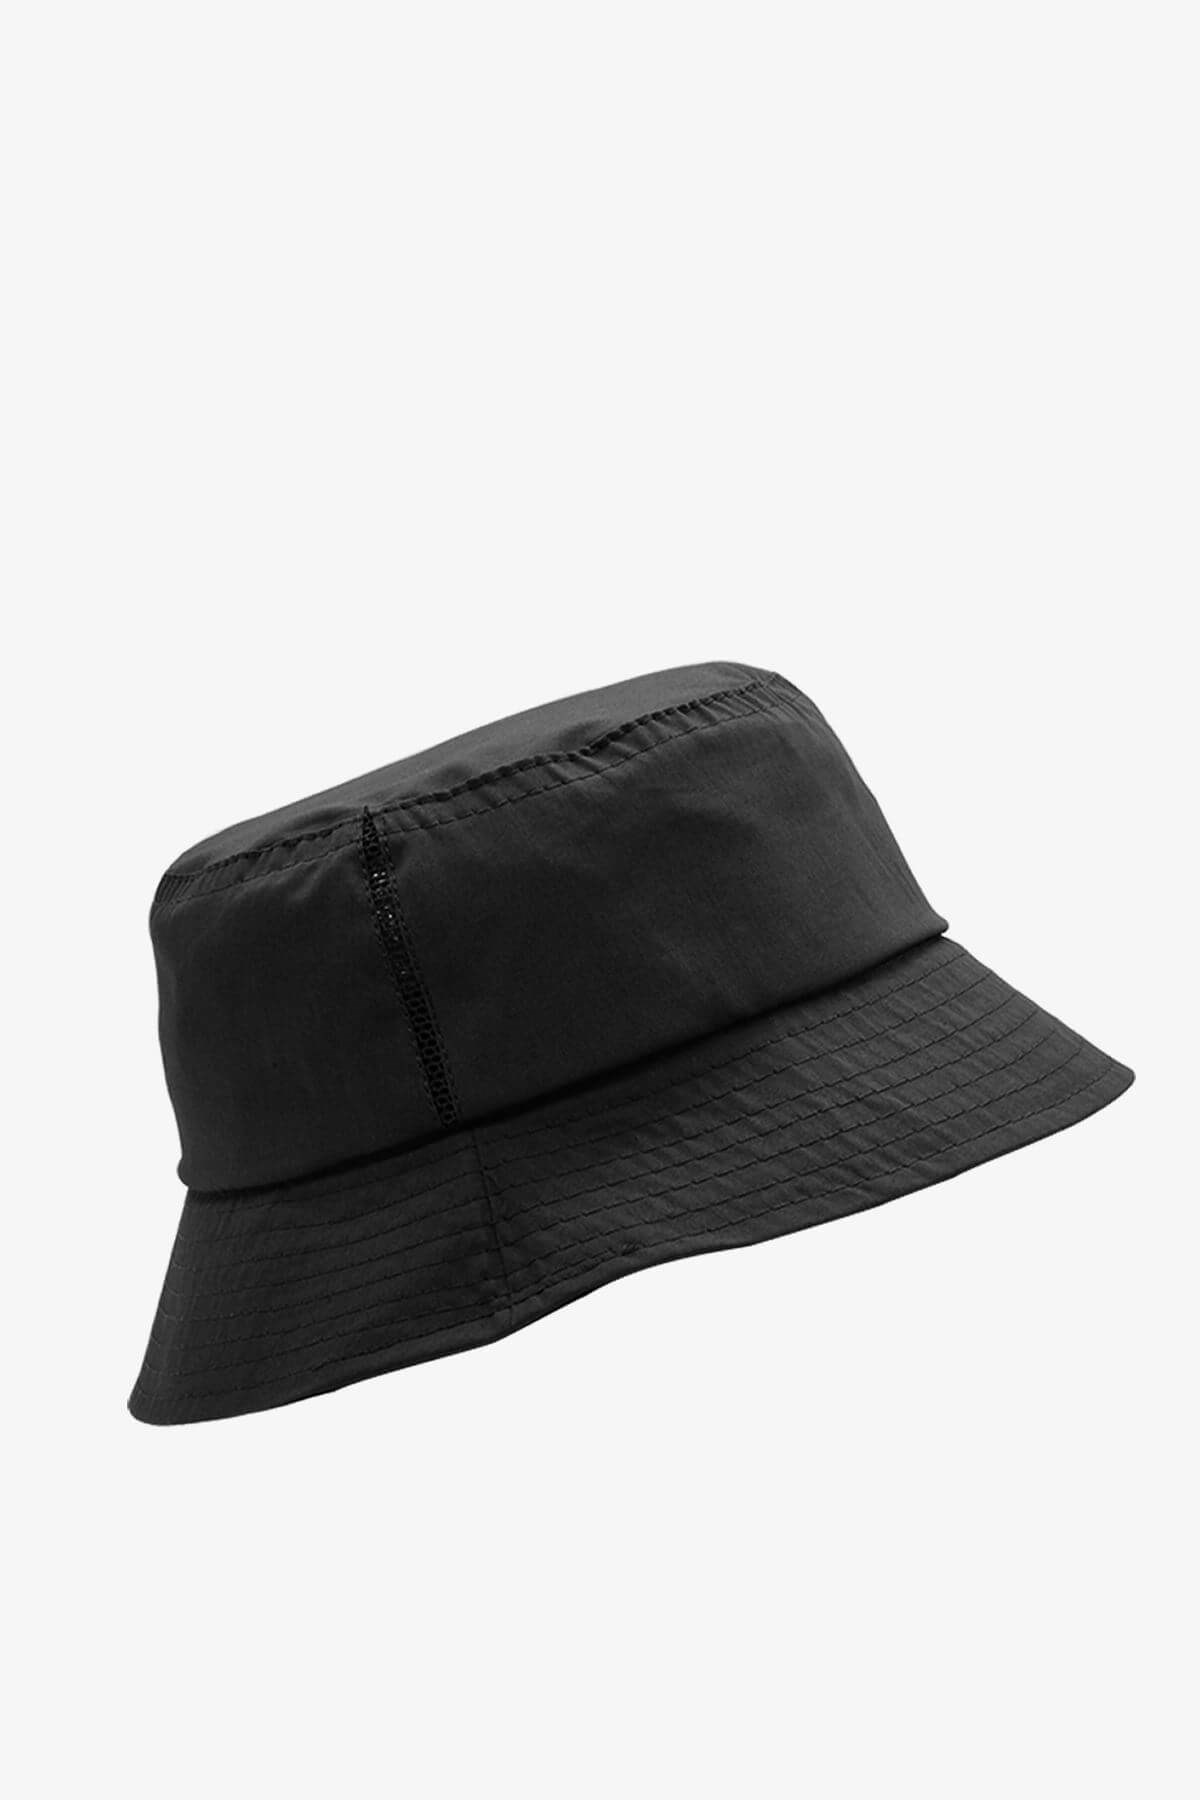 Külah Çok Hafif Bucket Şapka-Siyah KLH0415